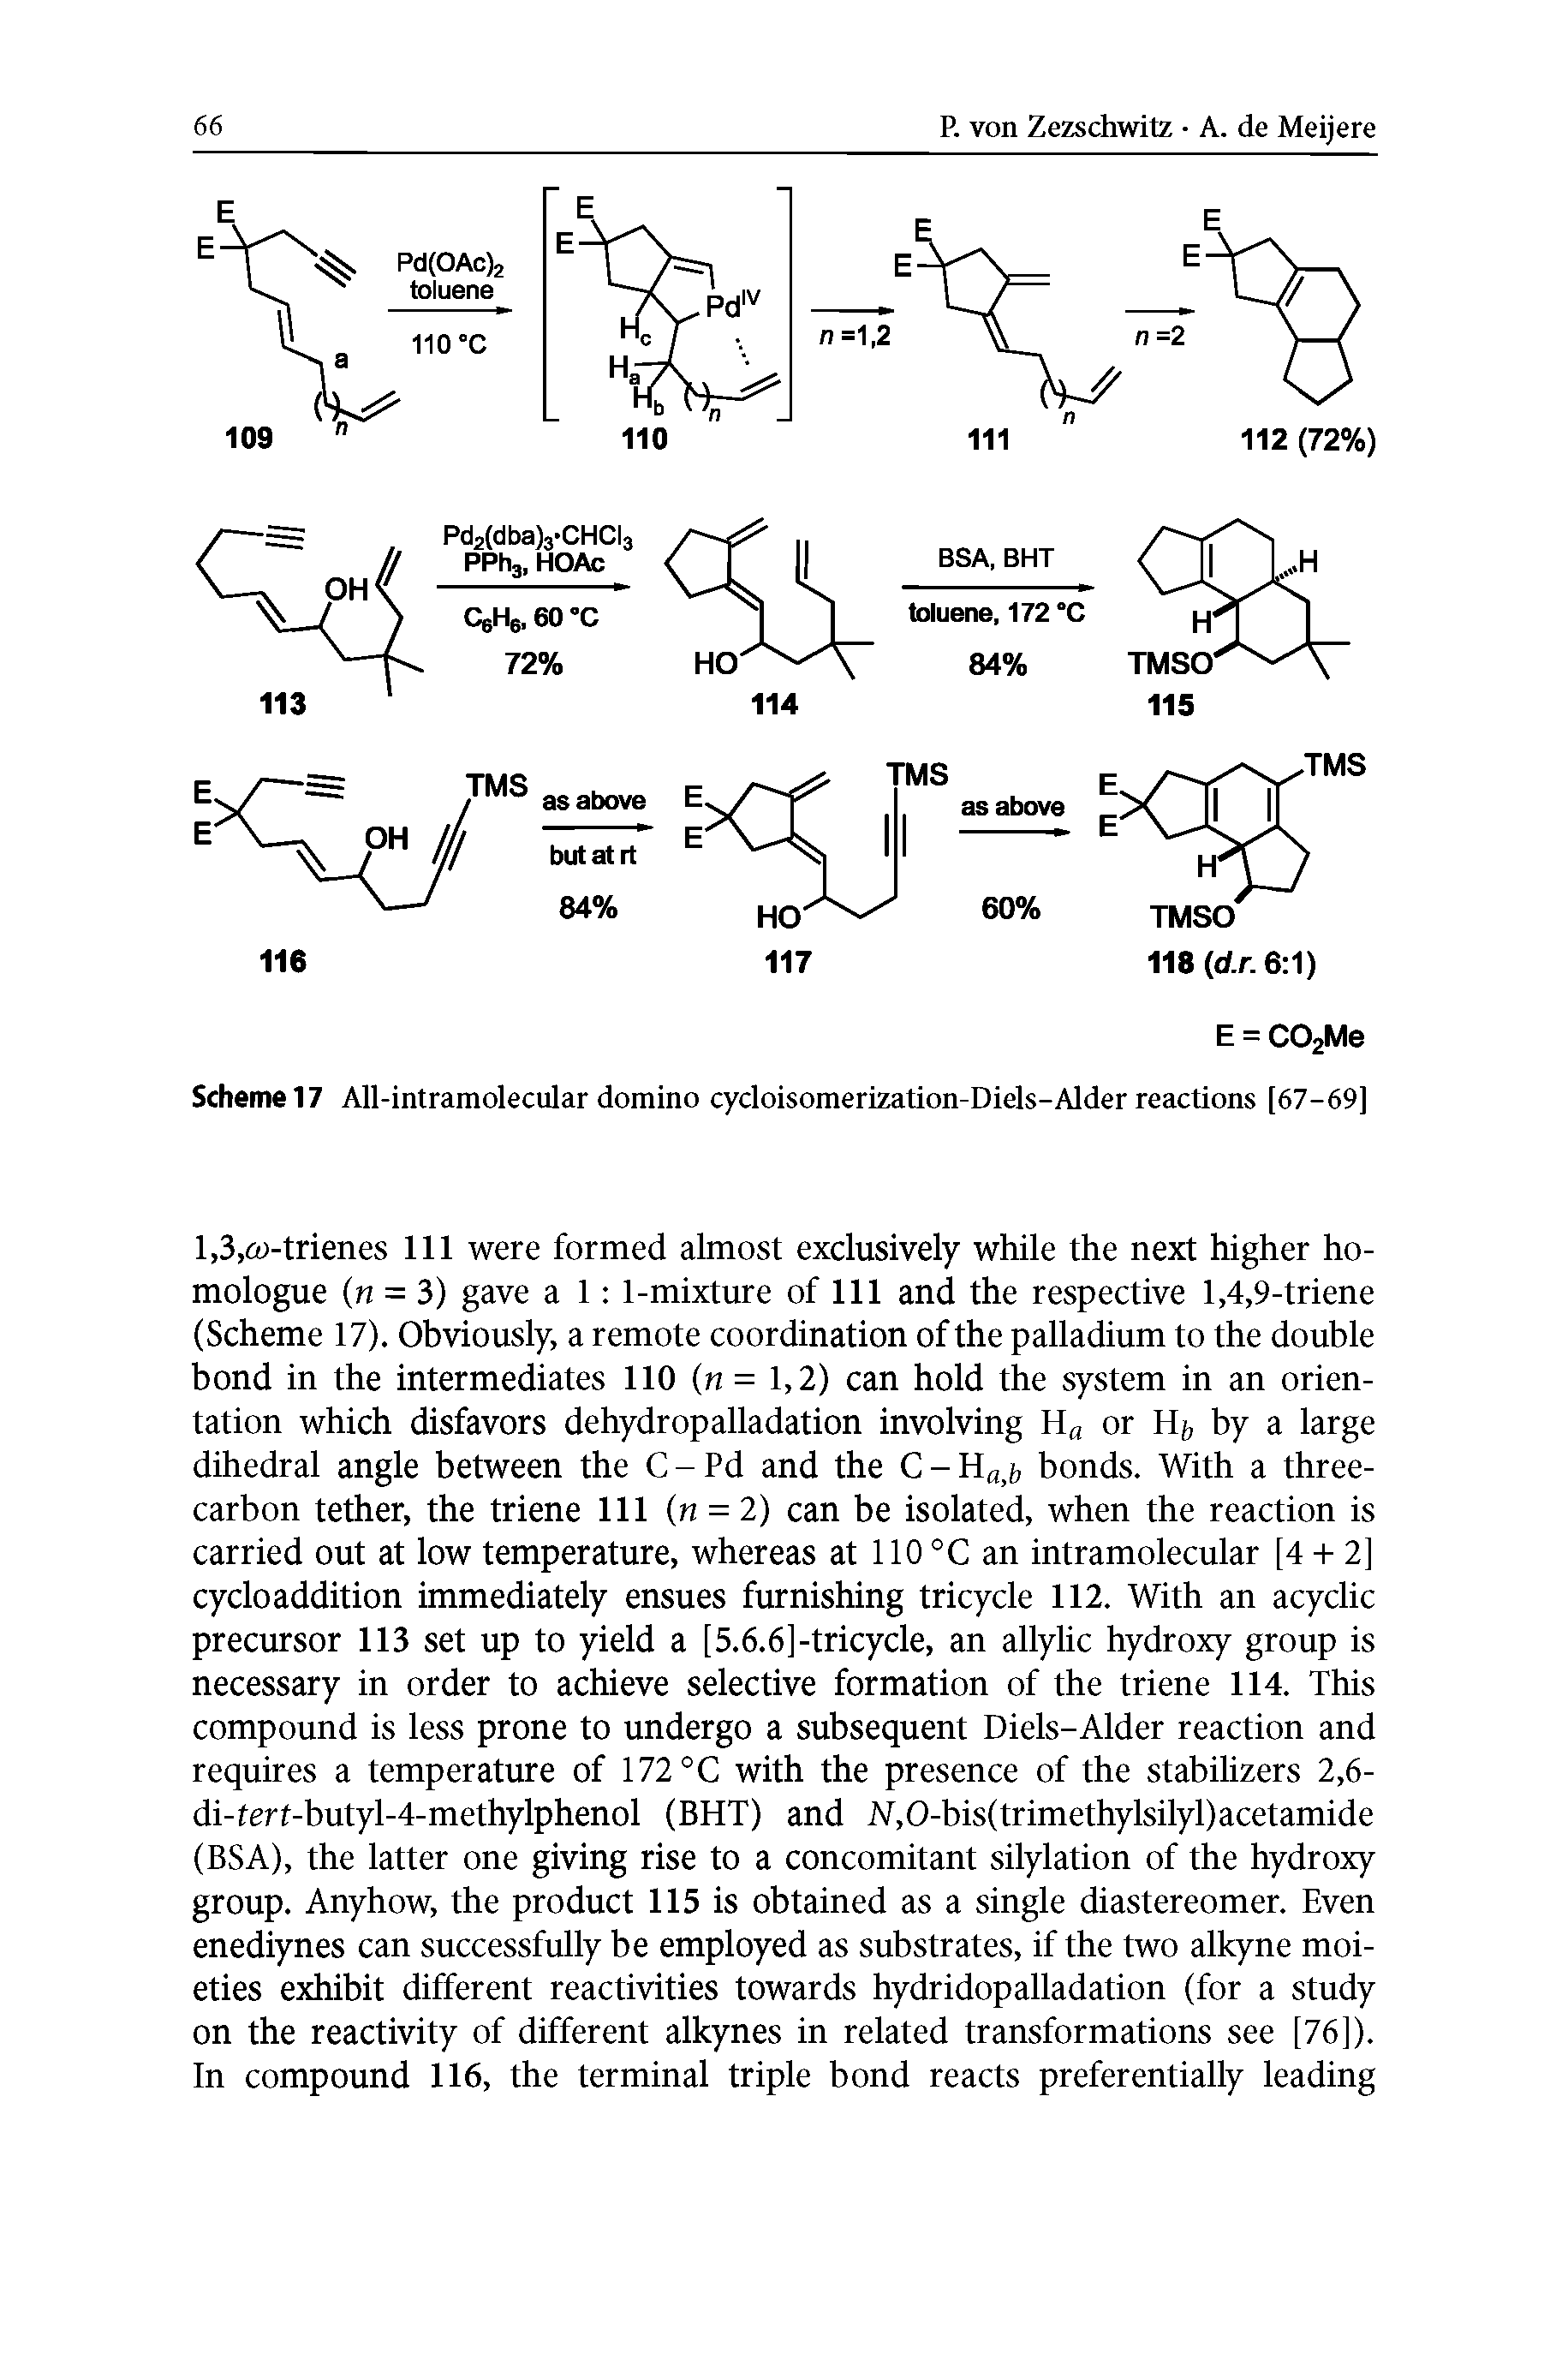 Scheme 17 All-intramolecular domino cycloisomerization-Diels-Alder reactions [67-69]...